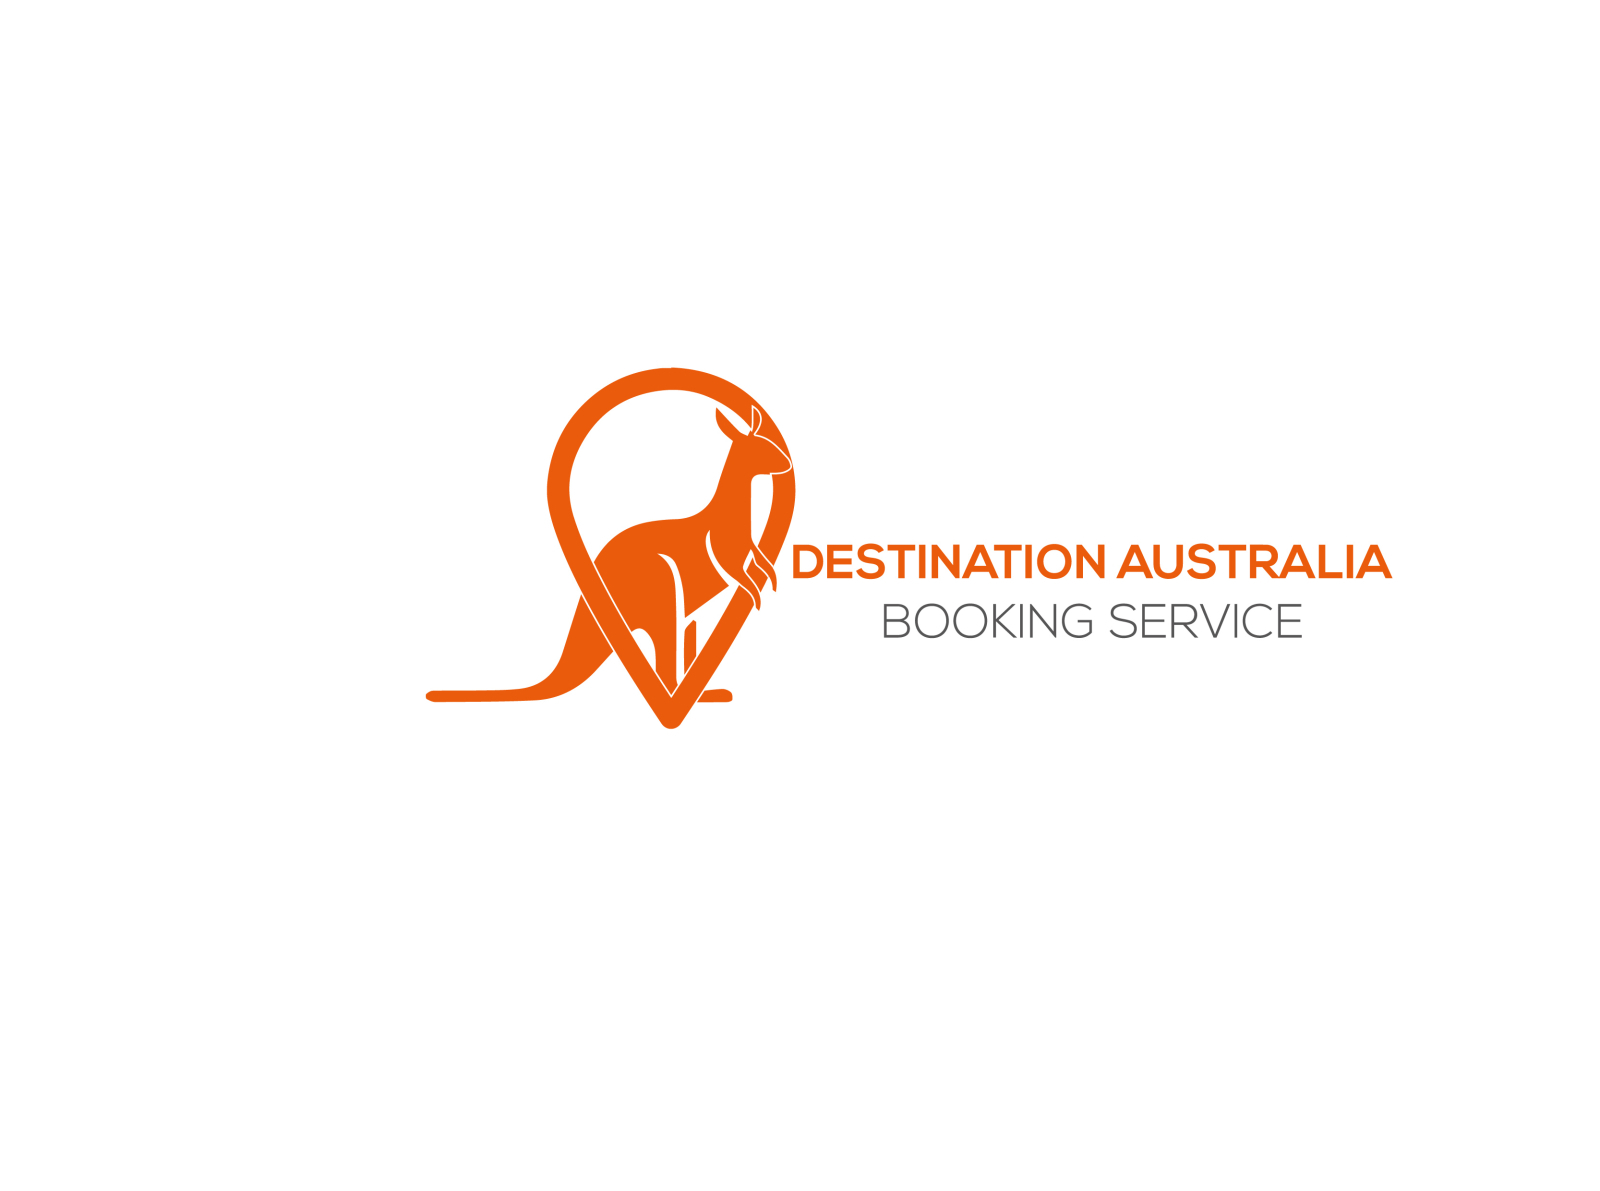 destination australia by mdshamimreza on Dribbble